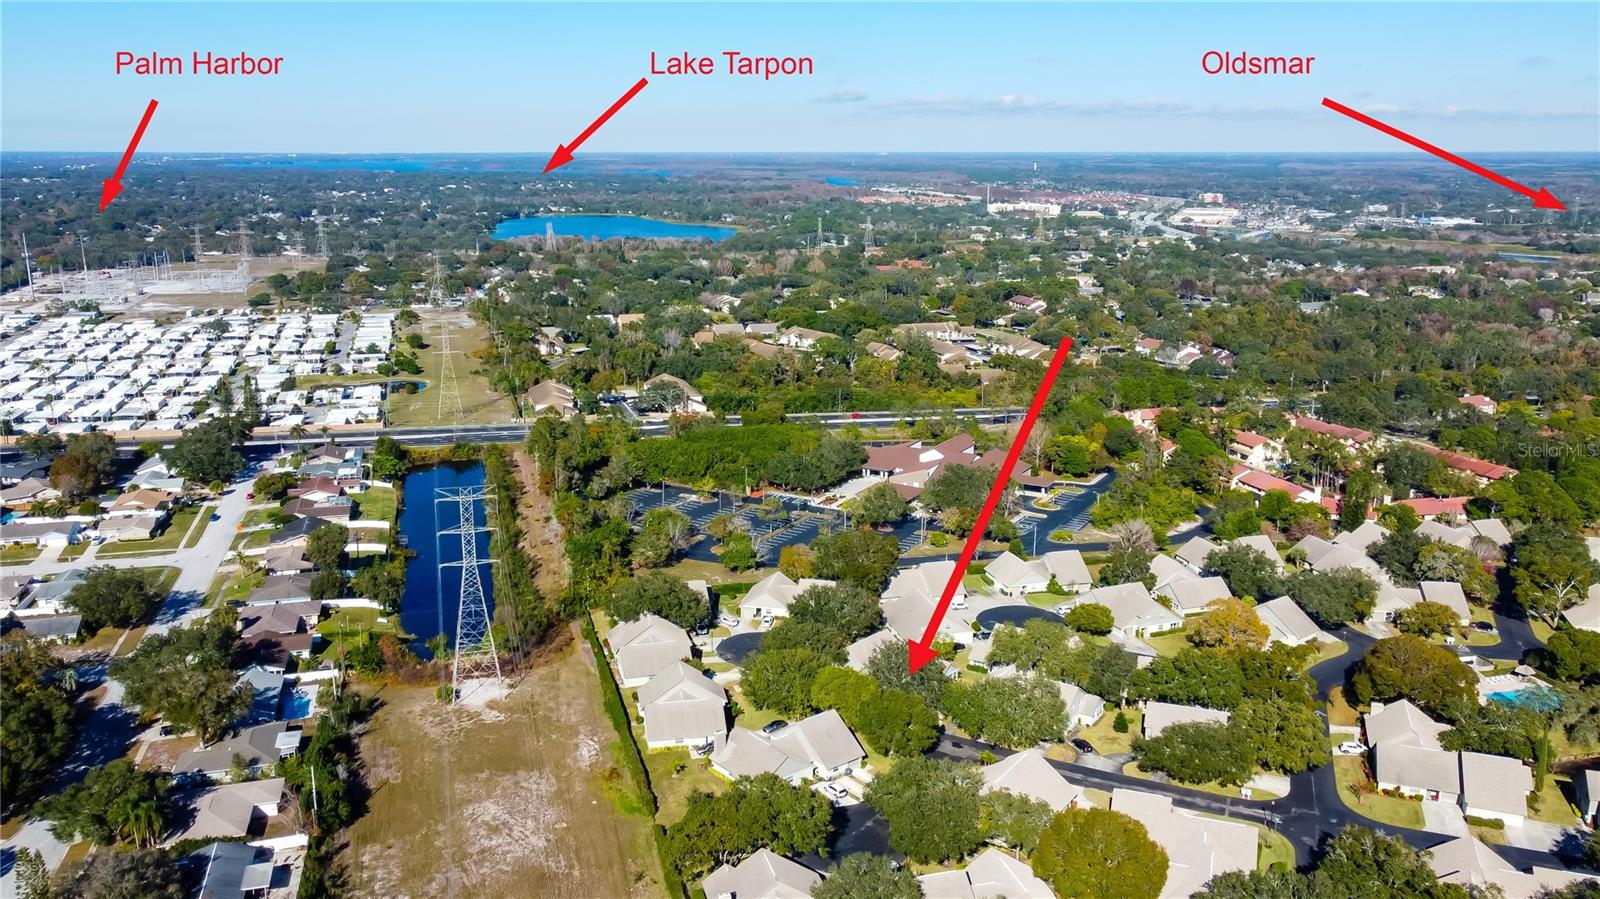 You Can See Lake Tarpon in the Vista!